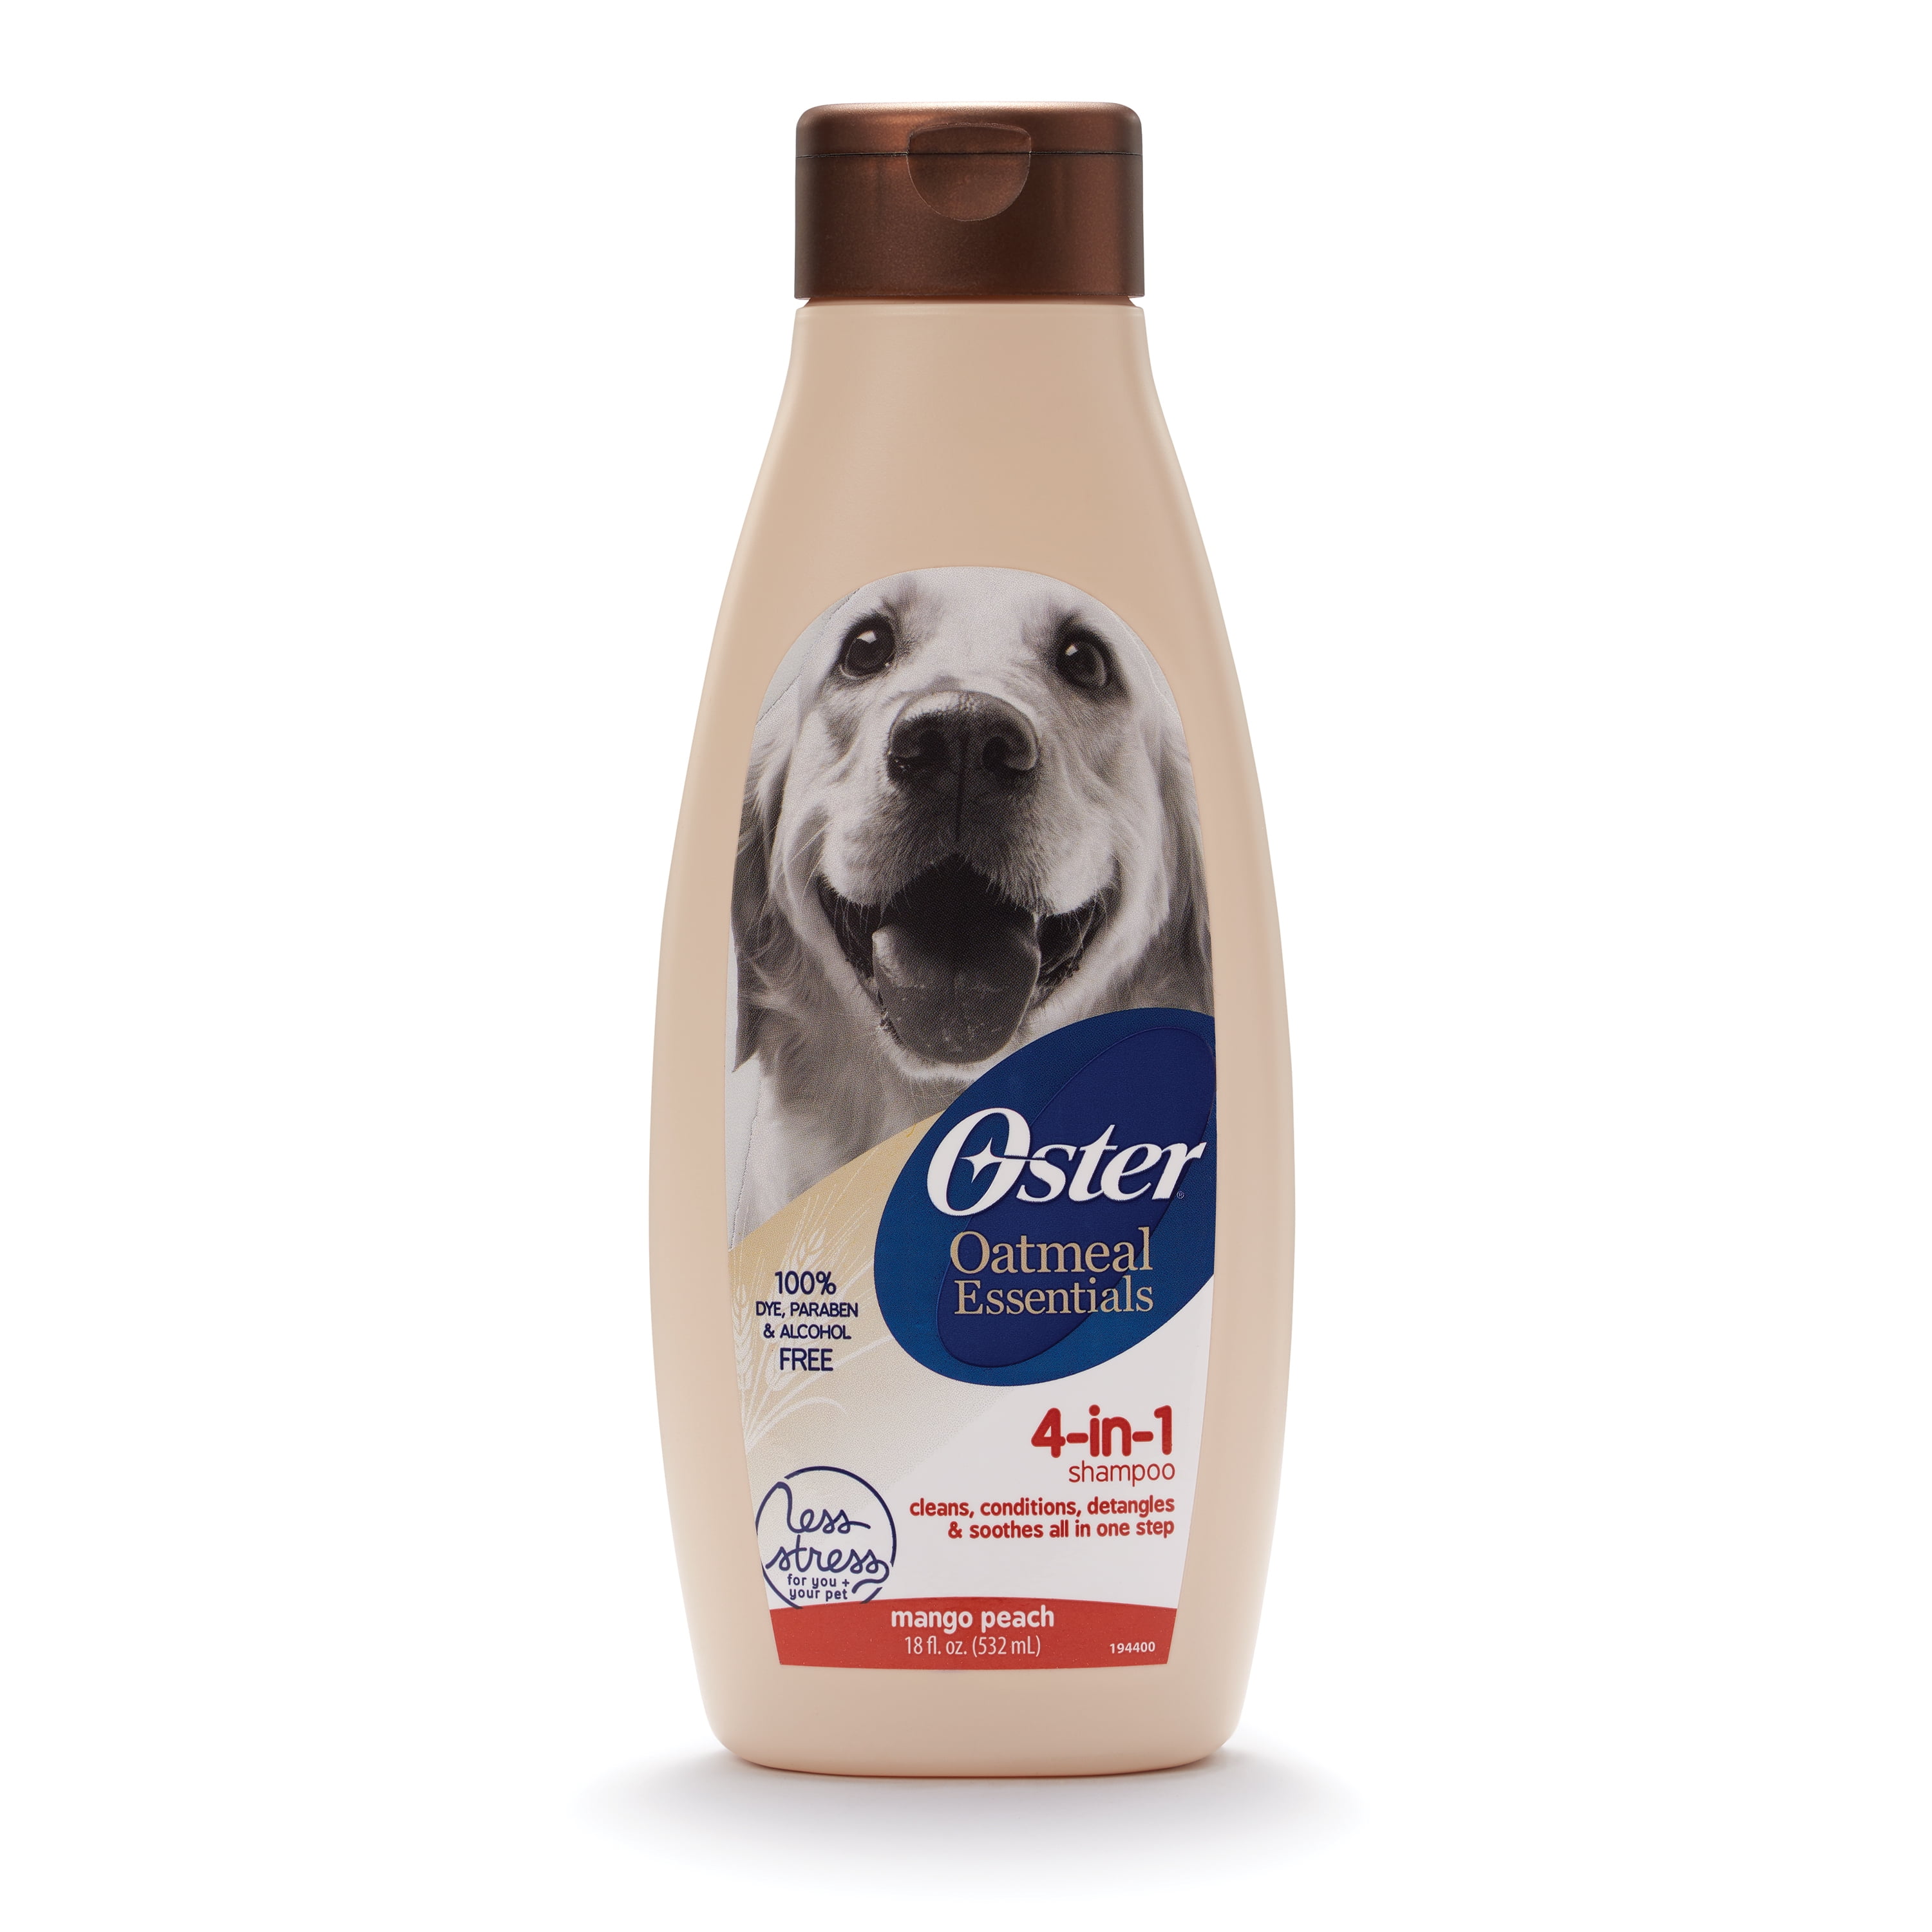 Oster Oatmeal Essentials 4-in-1 Dog Shampoo, Mango Peach, 18 oz.